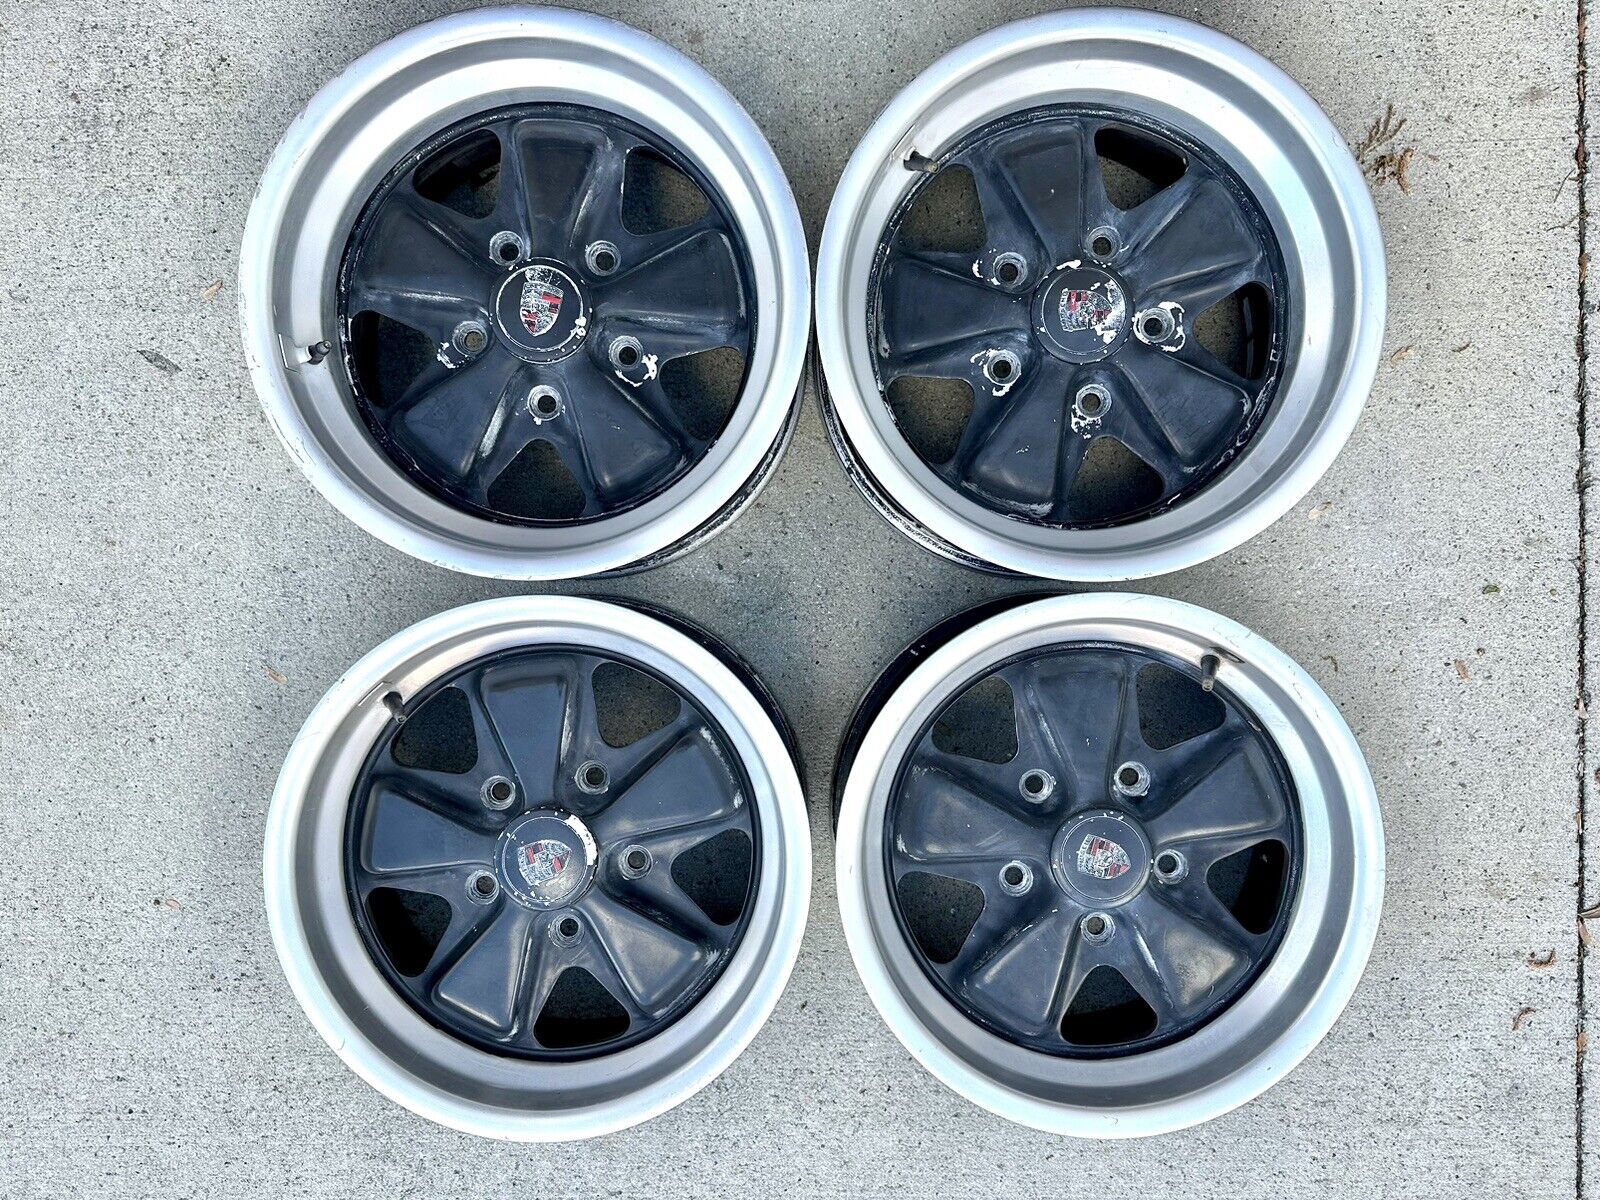 Fuchs Wheels Set Of 4 15x8 And 15x7 944, 911